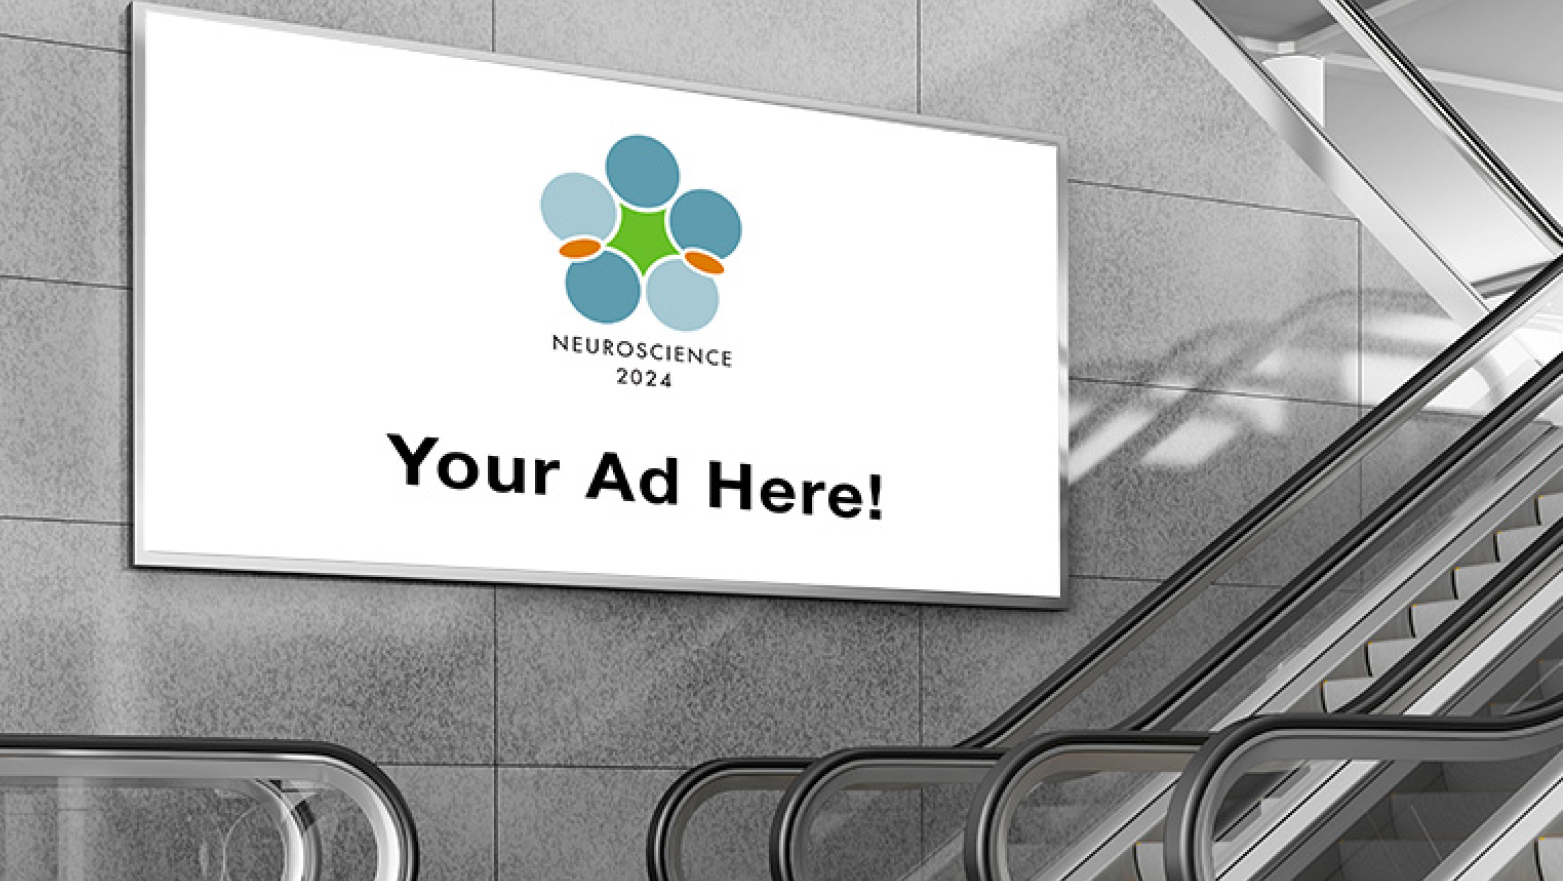 Example of Digital Signage ad at Neuroscience 2024